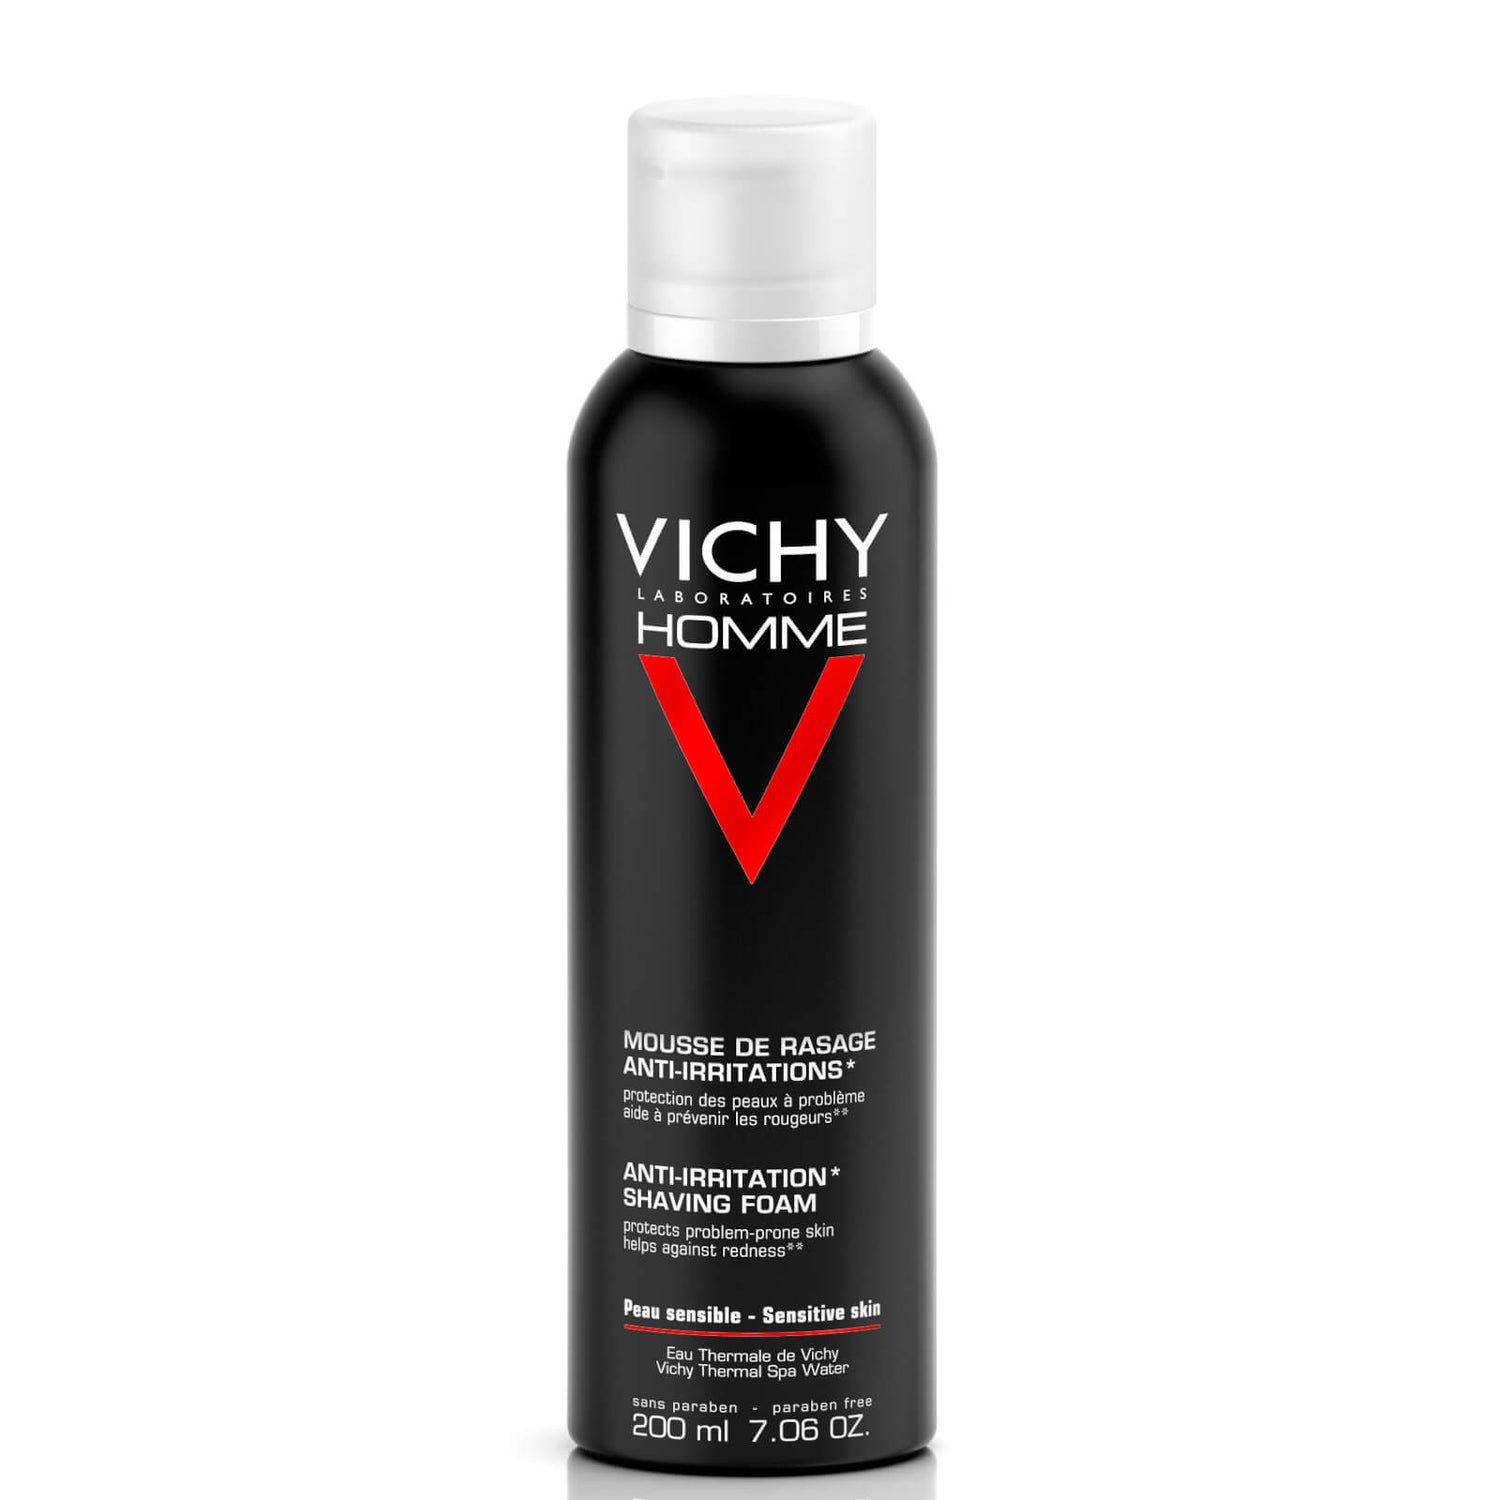 Vichy Homme schiuma da barba per pelli sensibili 200 ml